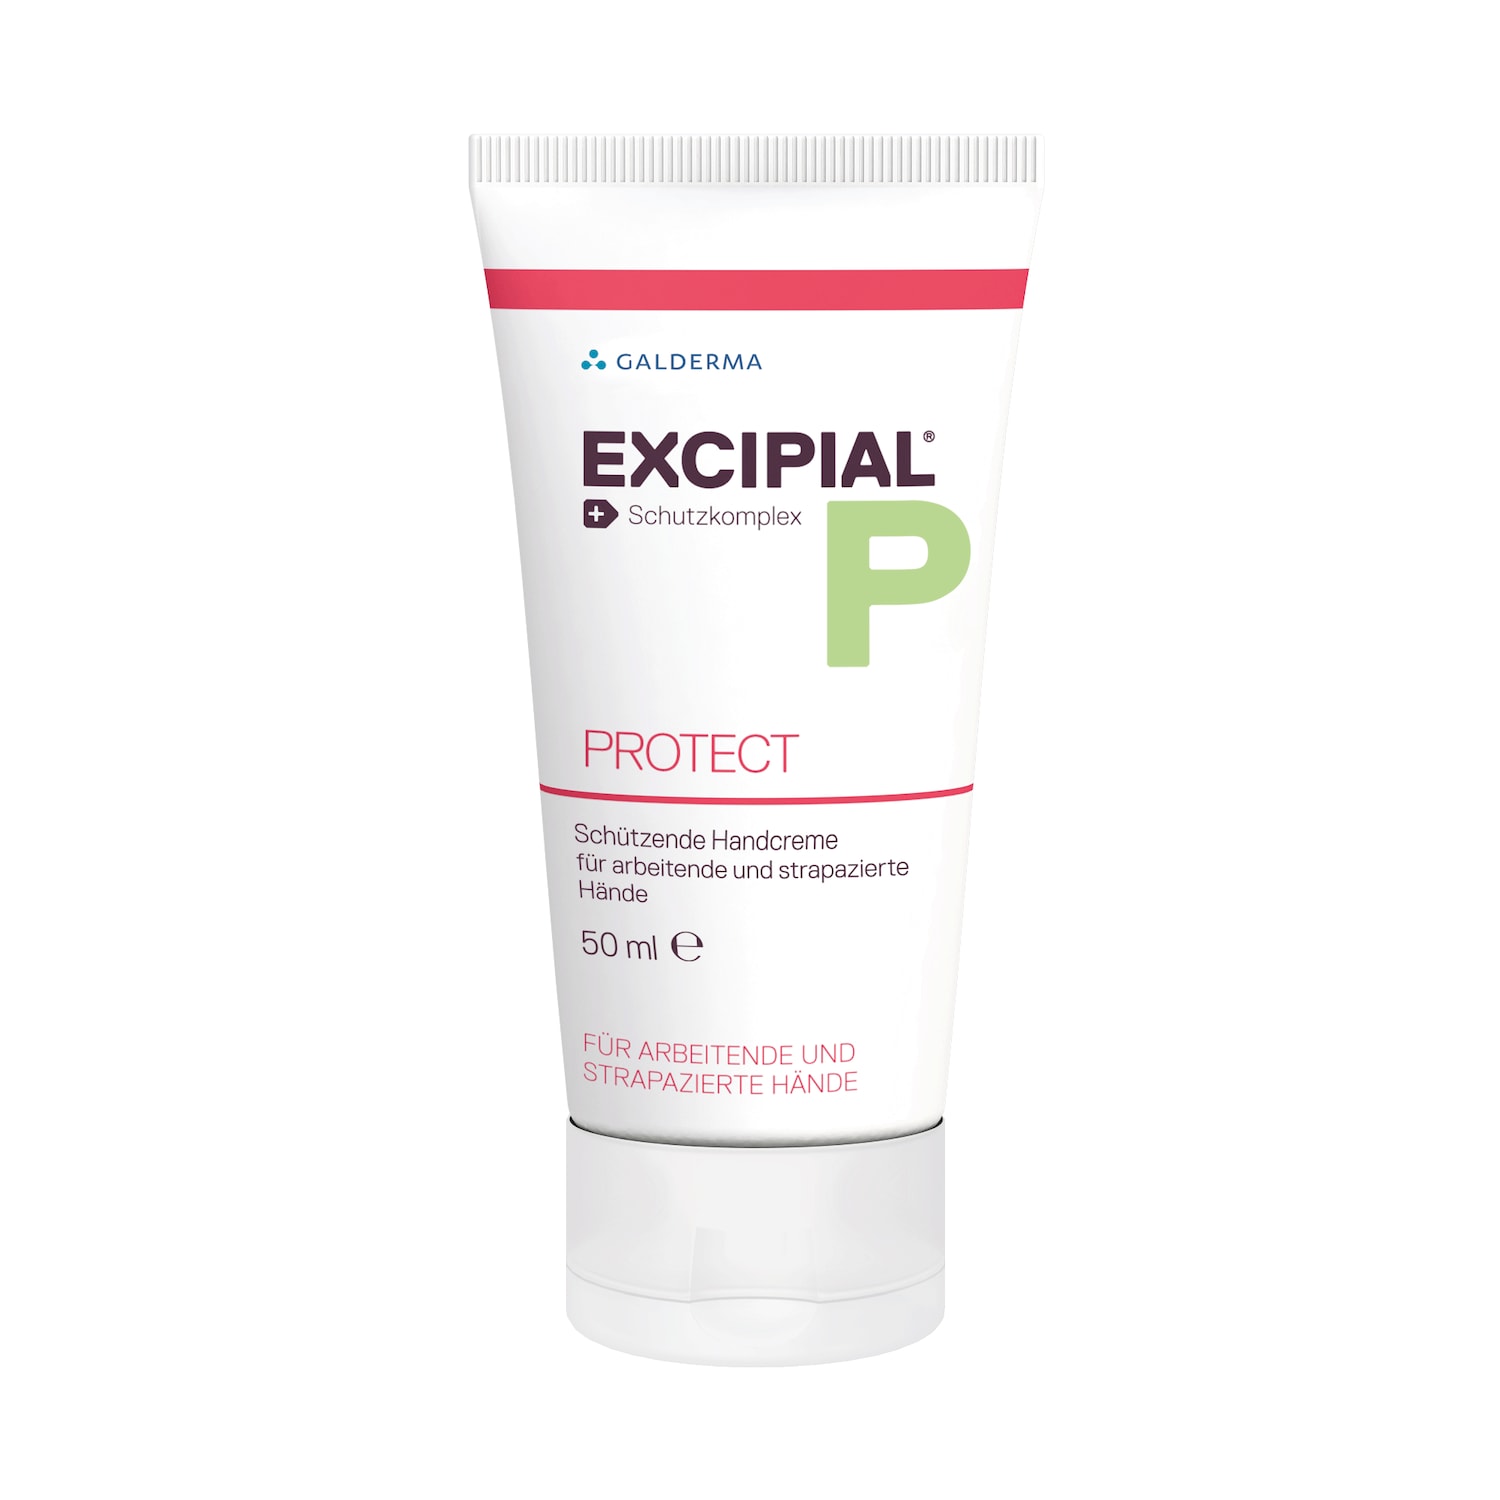 Excipial Protect cream